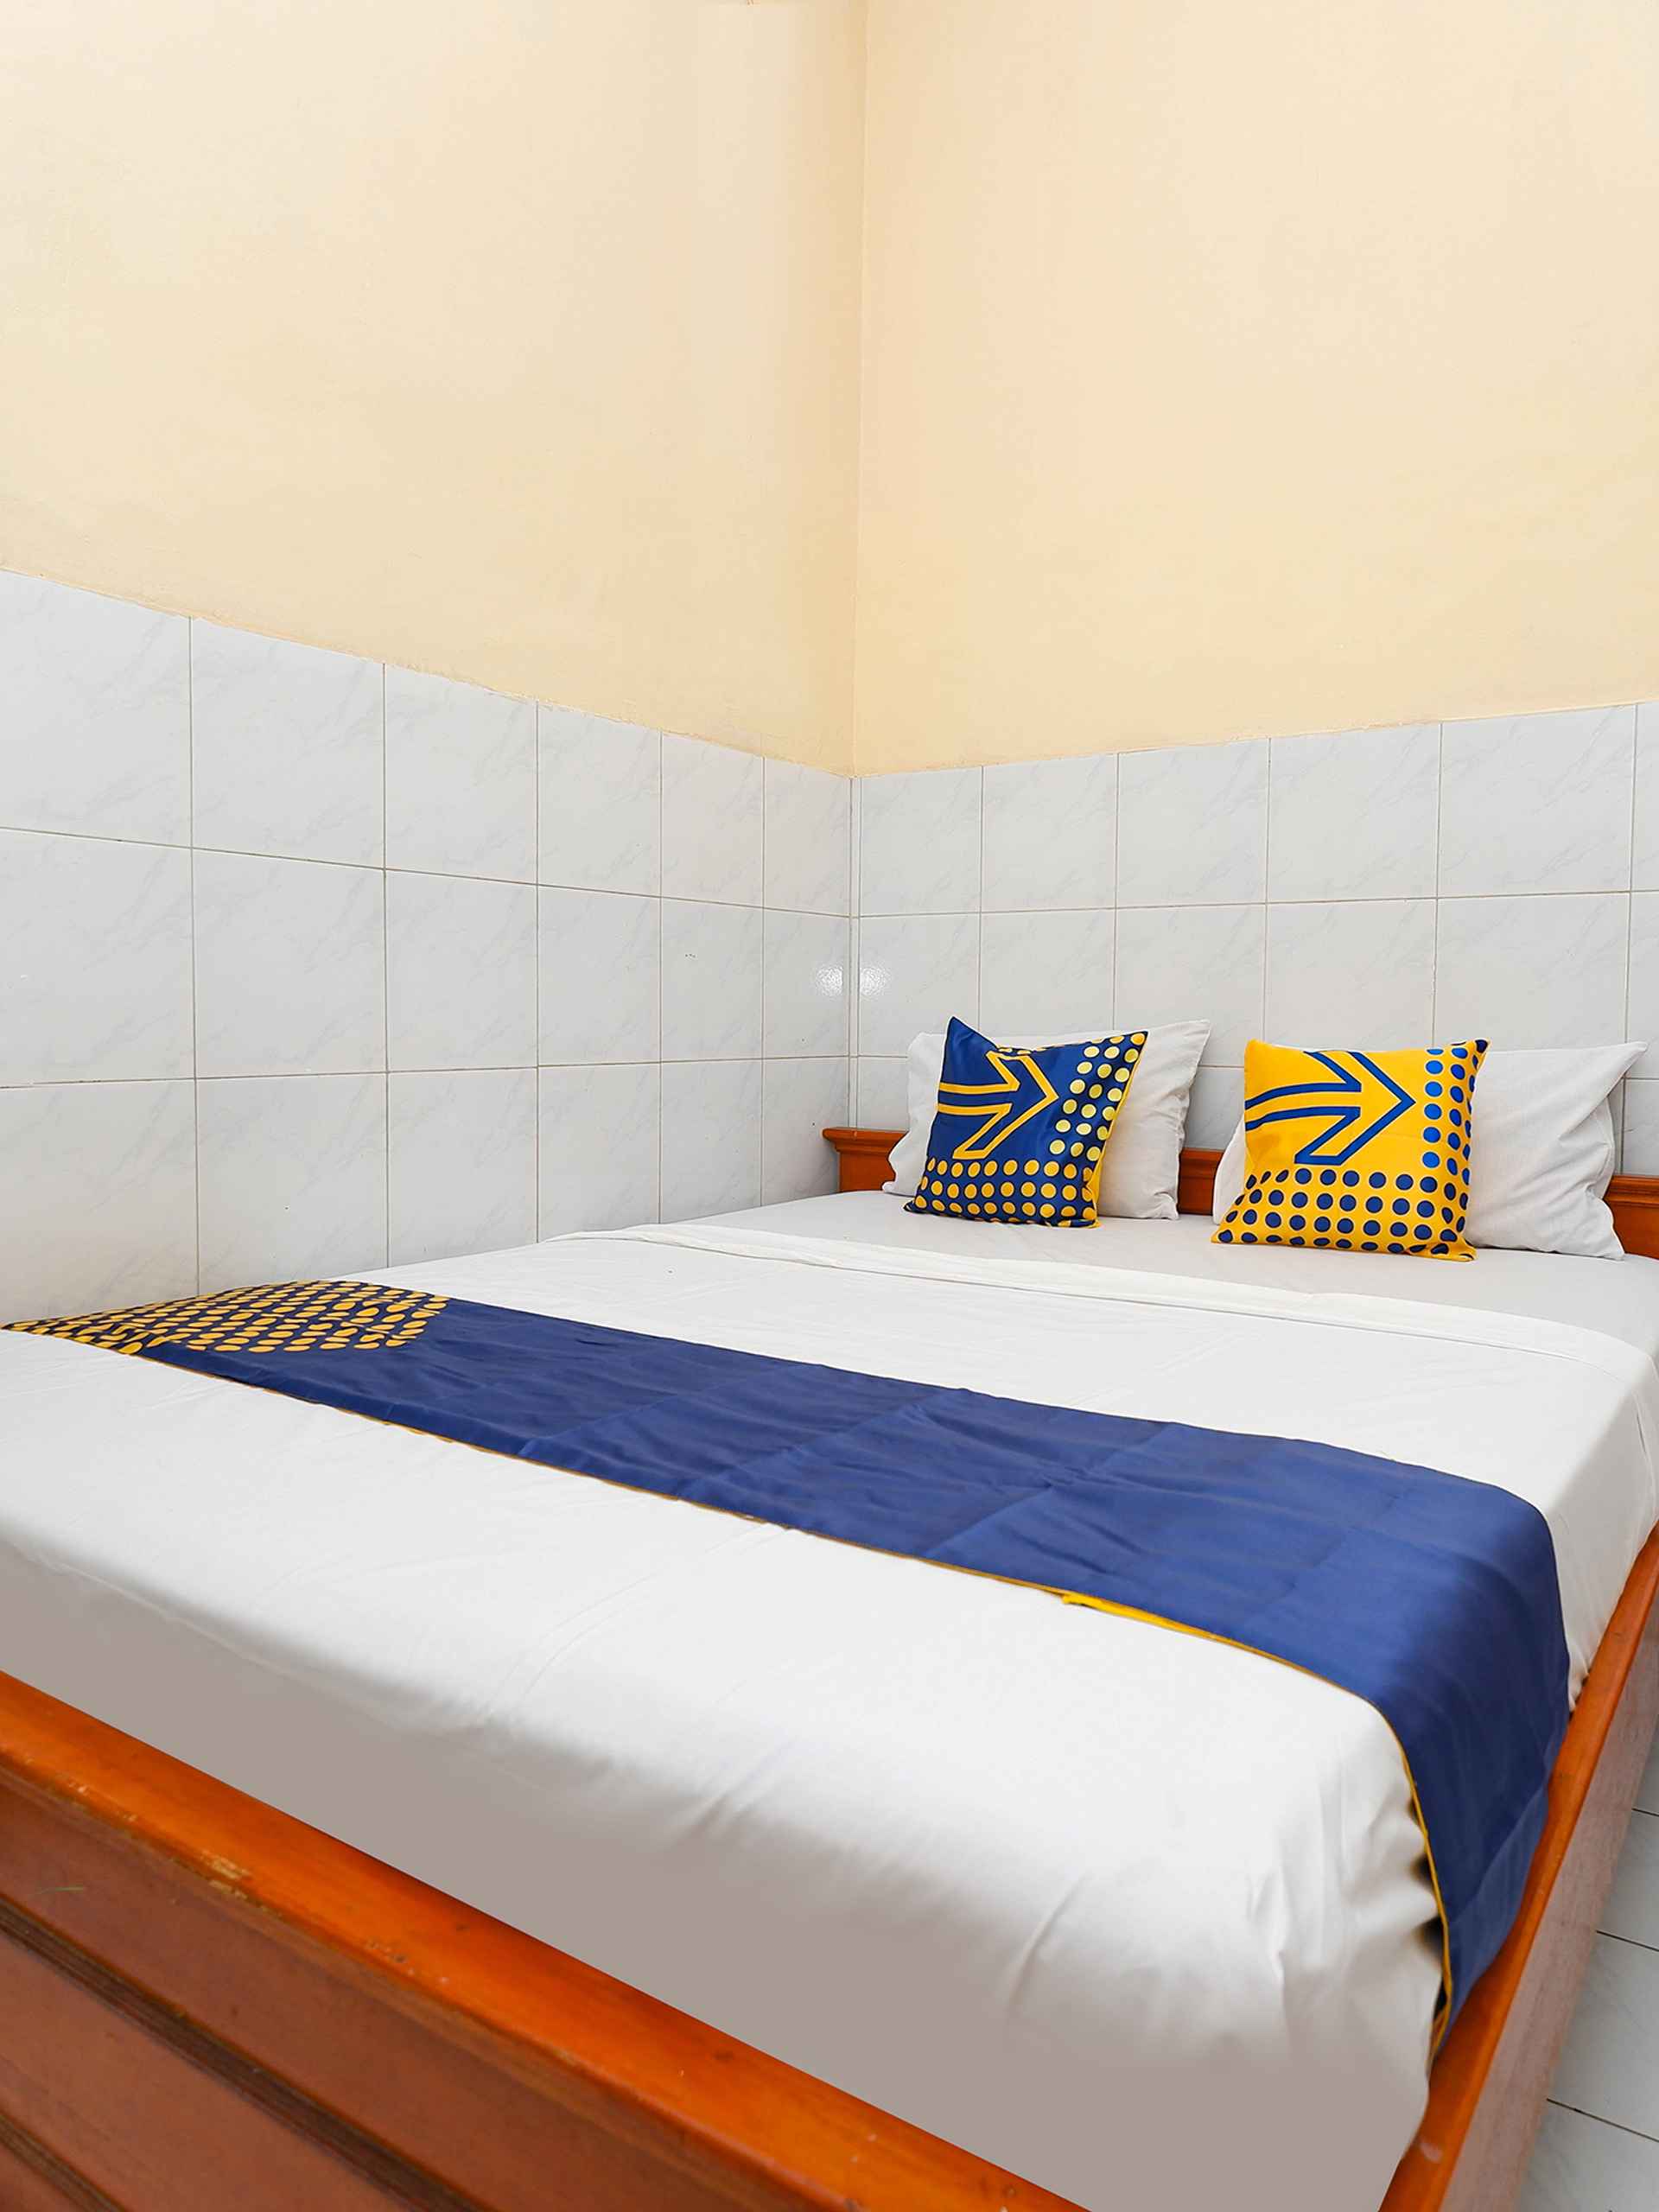 Bedroom SPOT ON 2011 Hotel Mekar Sari